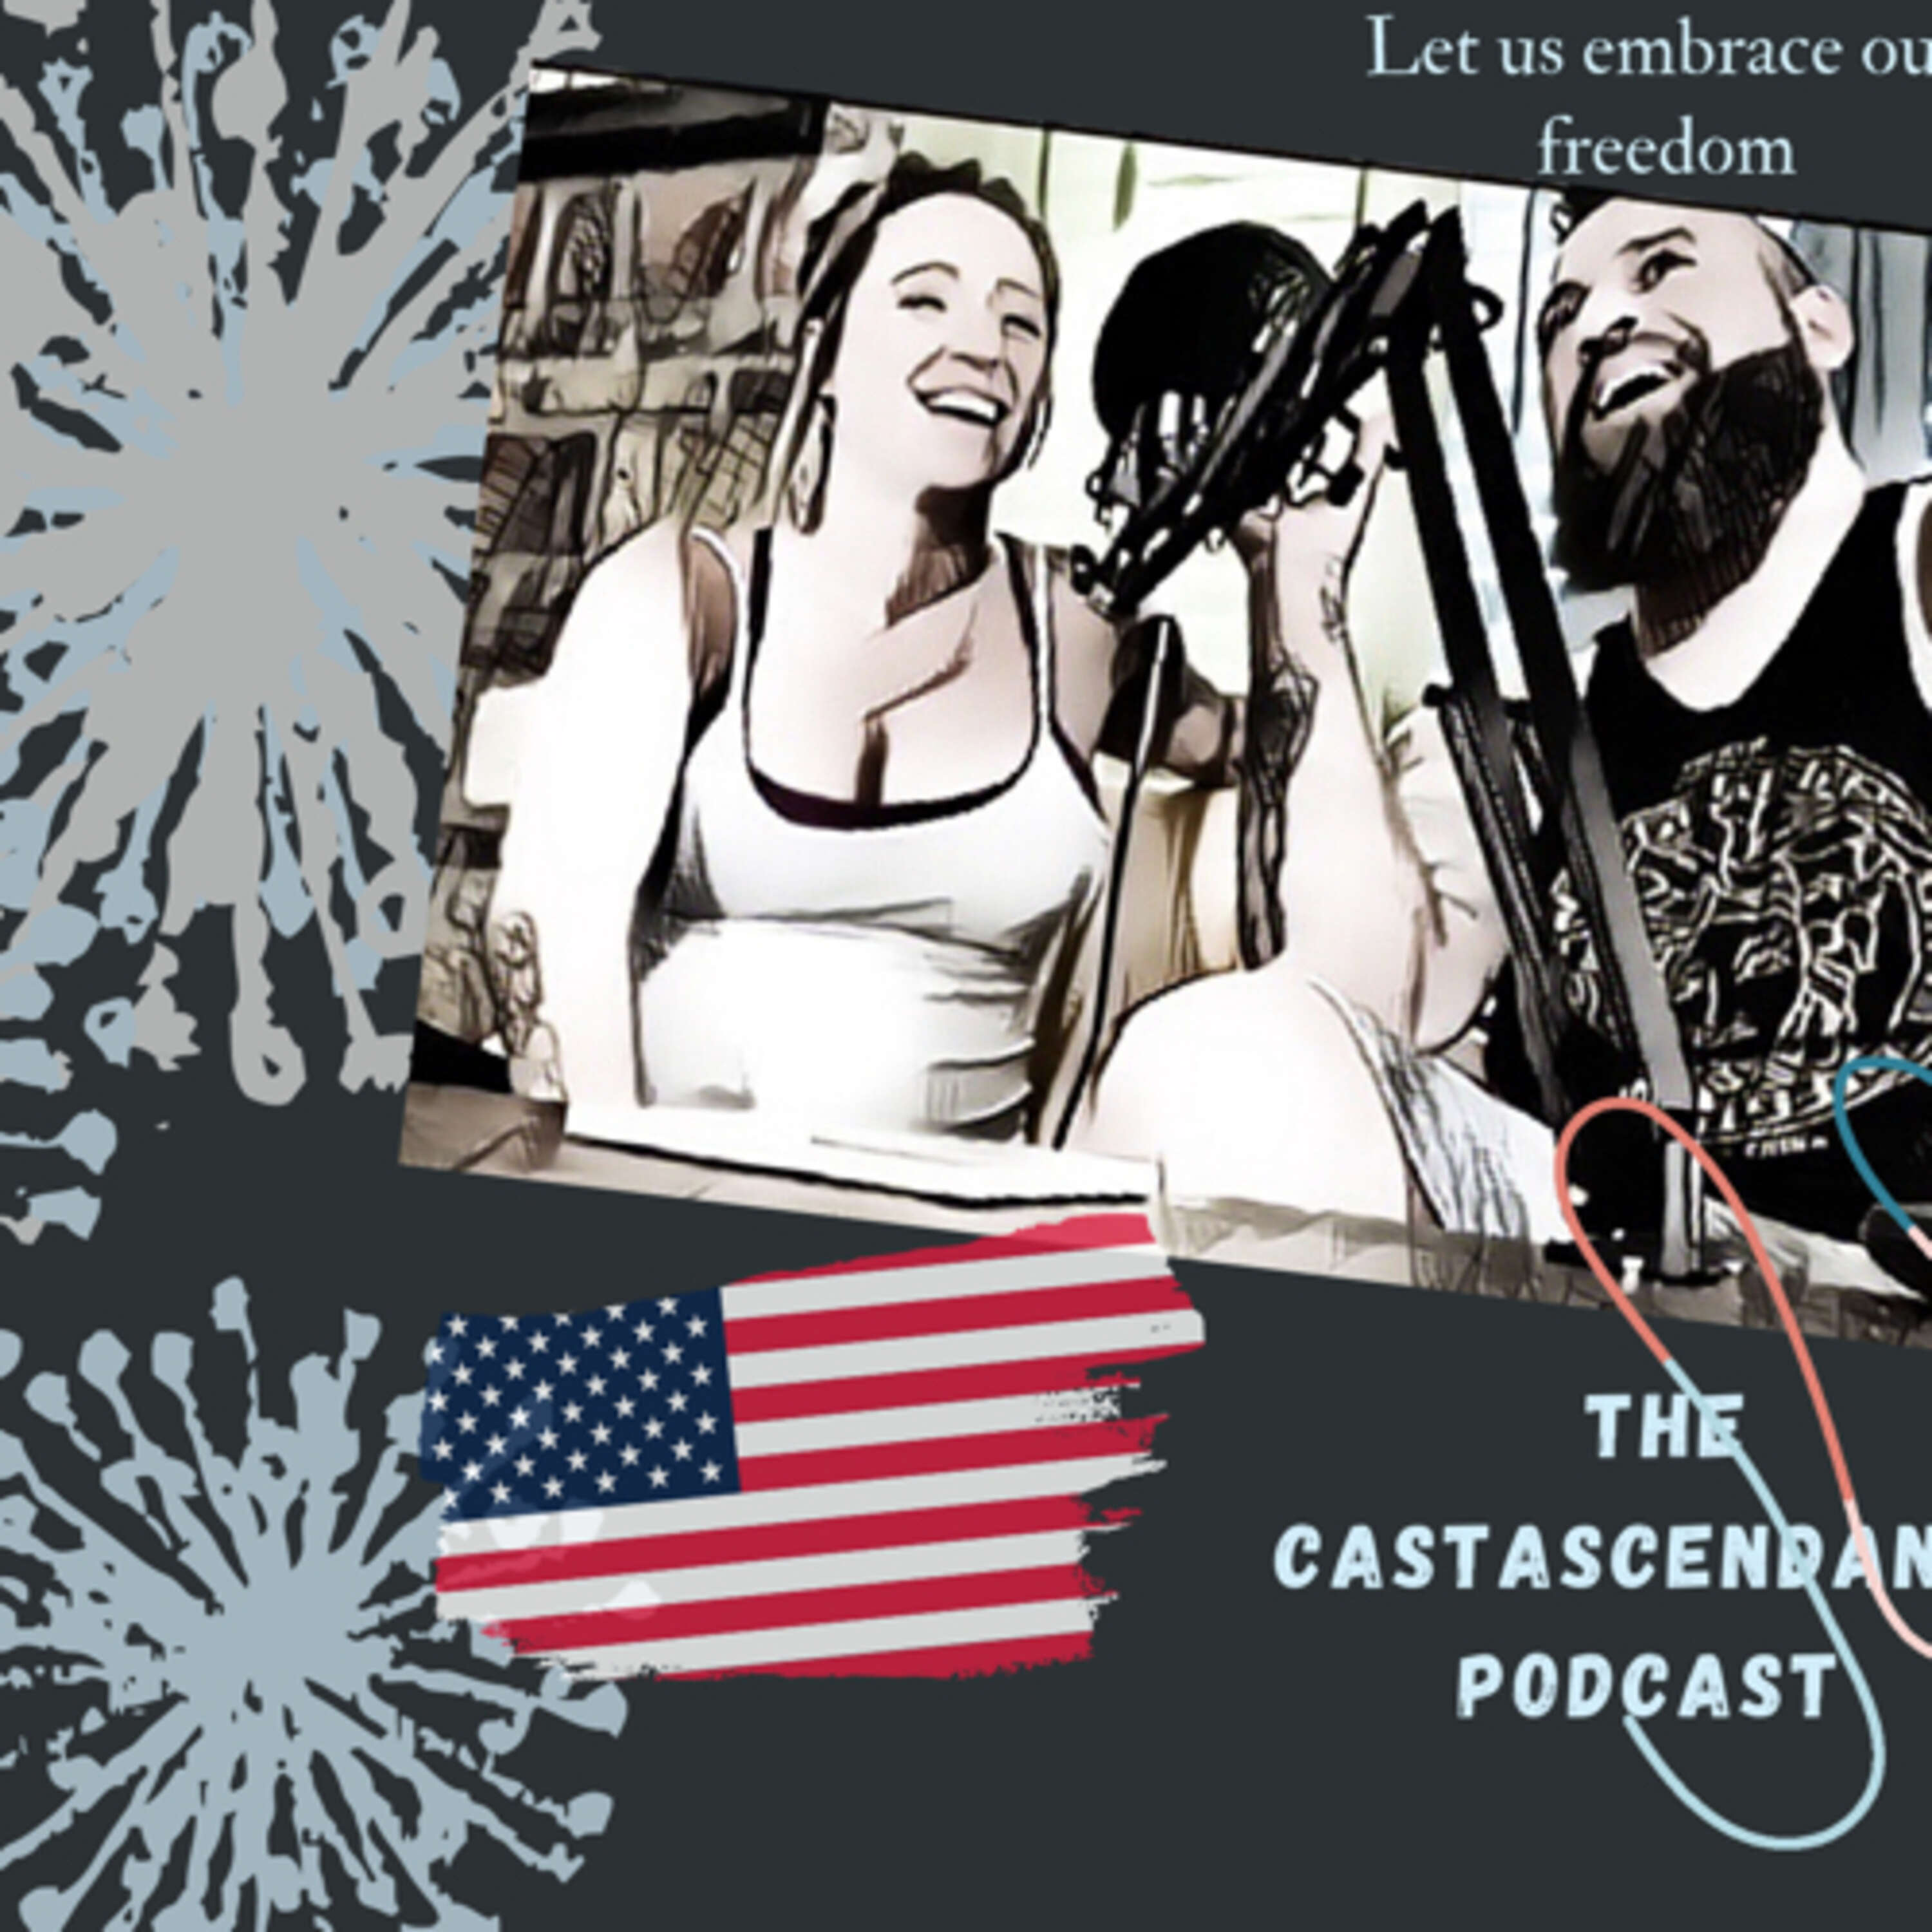 Artwork for podcast The CastAscendancy Podcast